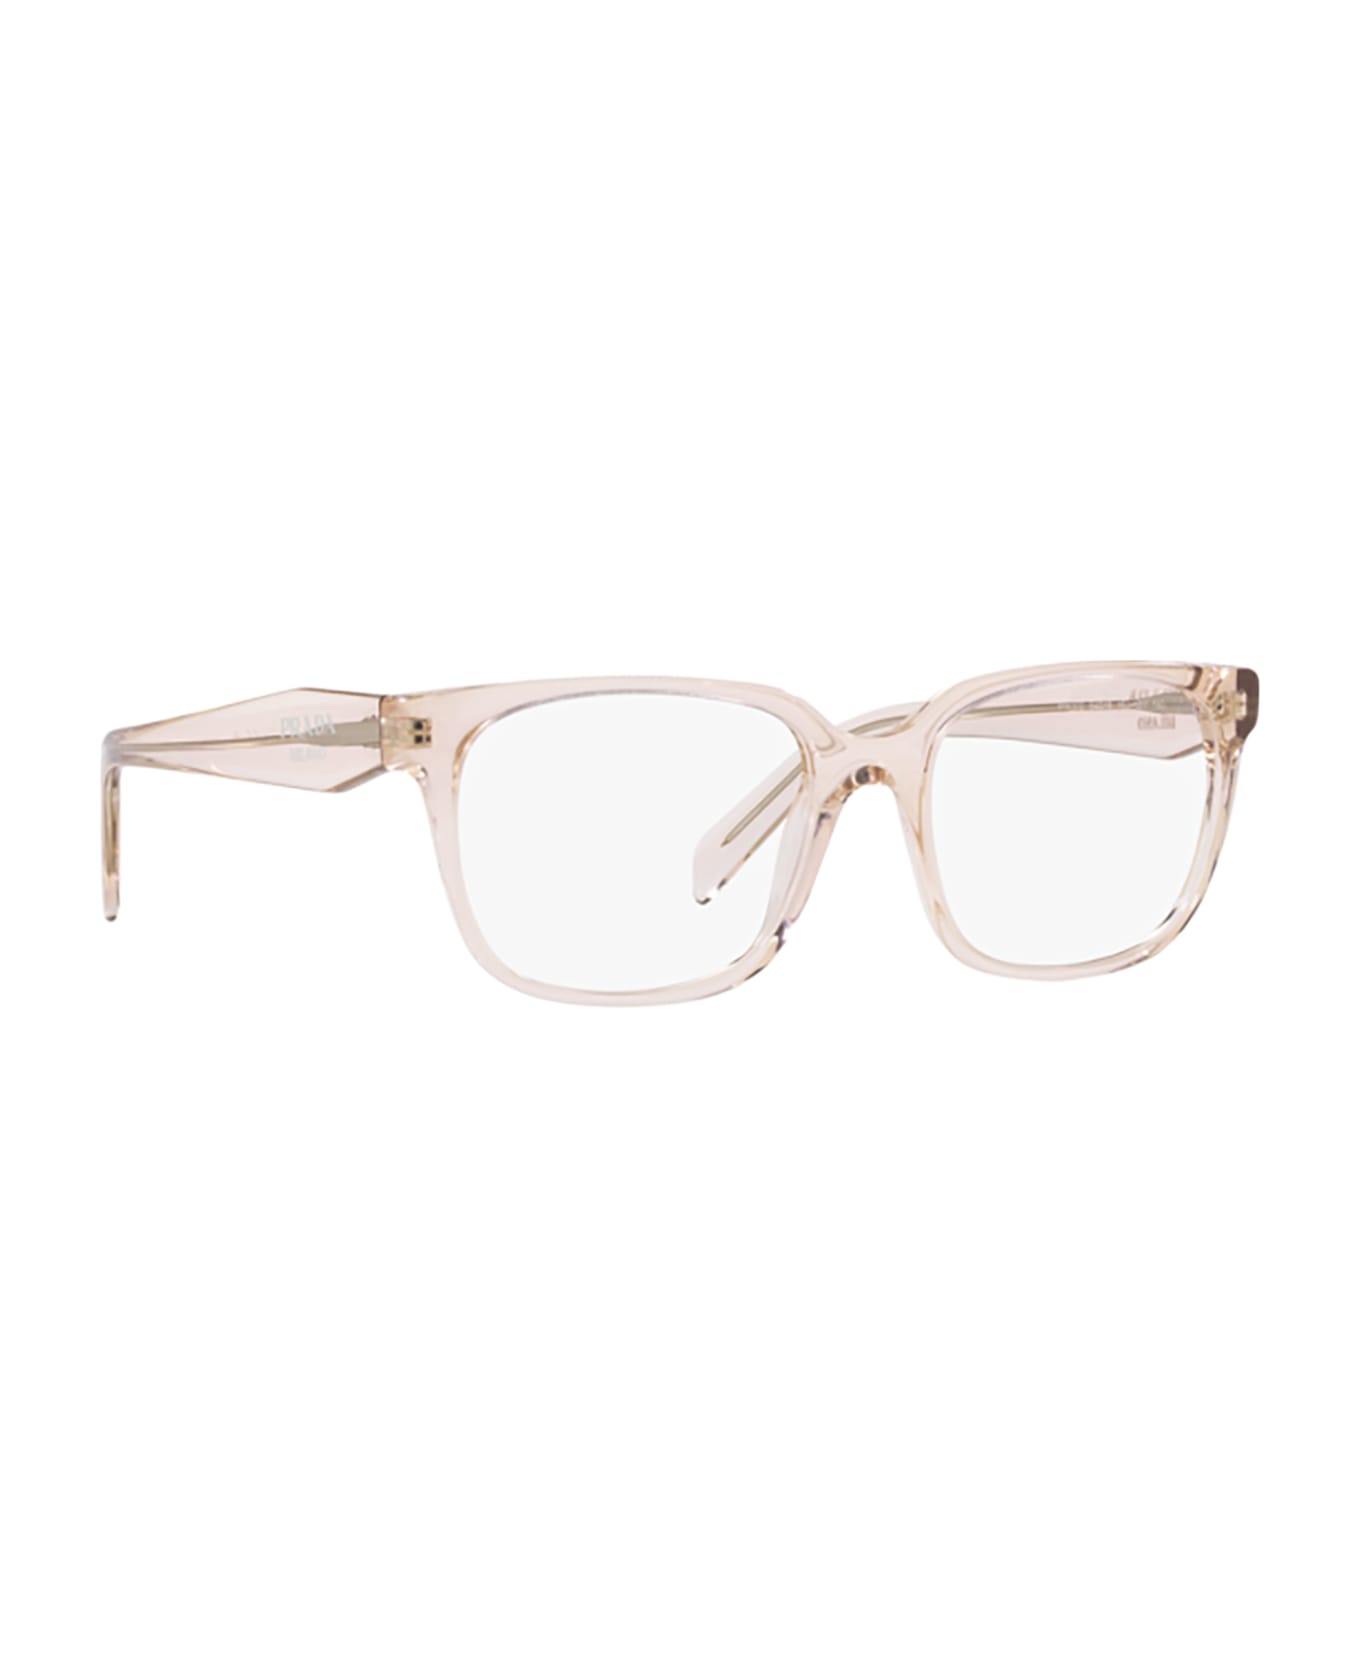 Prada Eyewear Pr 17zv Crystal Pink Glasses - Crystal Pink